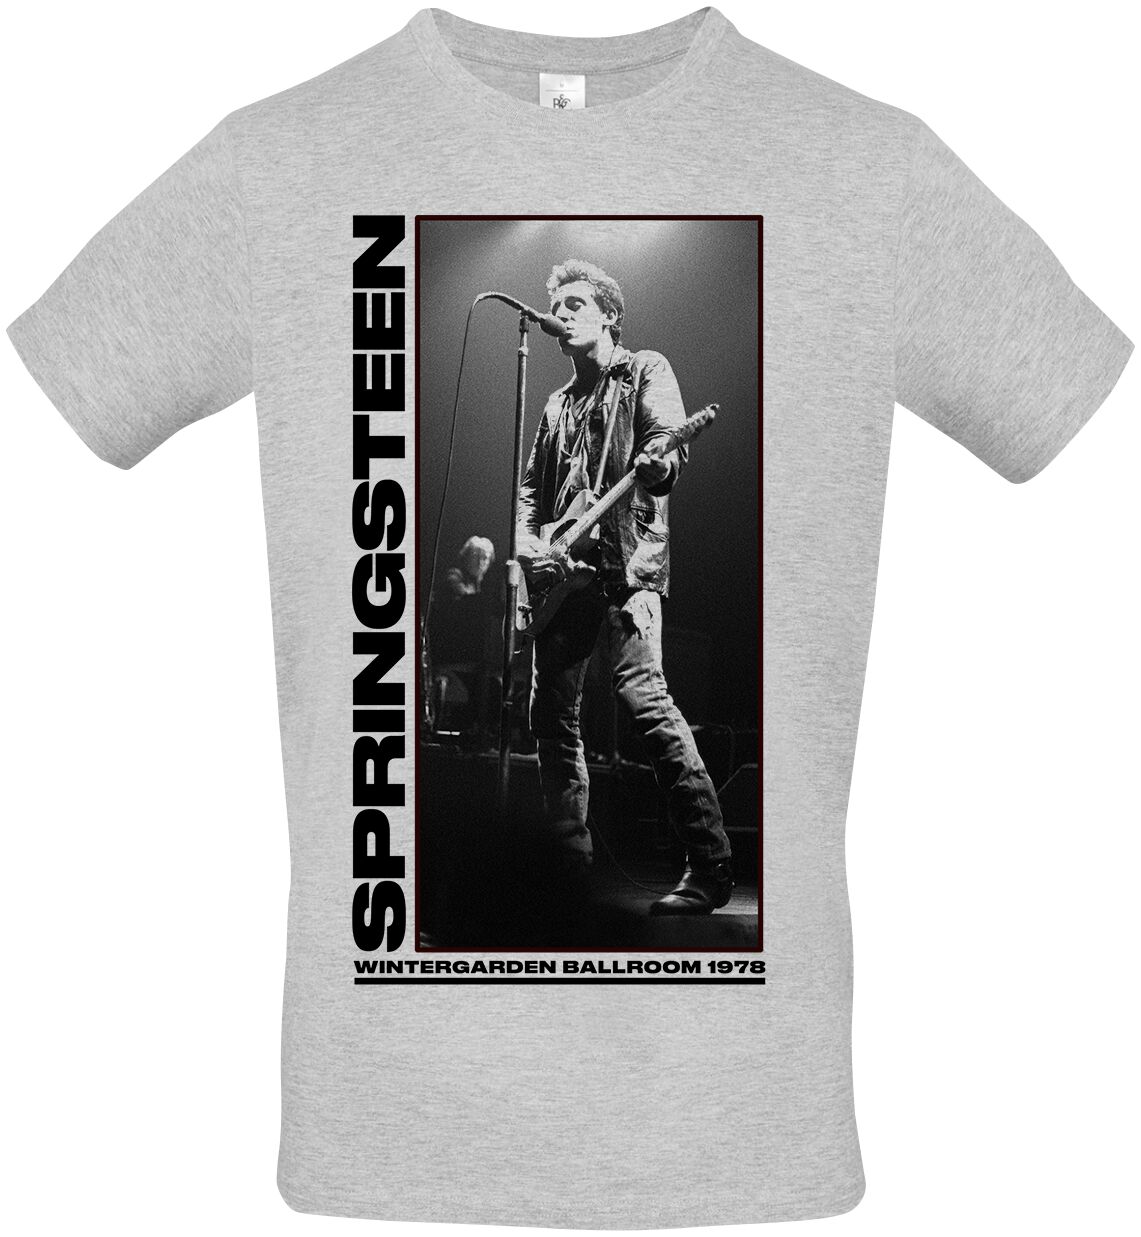 Bruce Springsteen Wintergarden Photo T-Shirt grau meliert in S